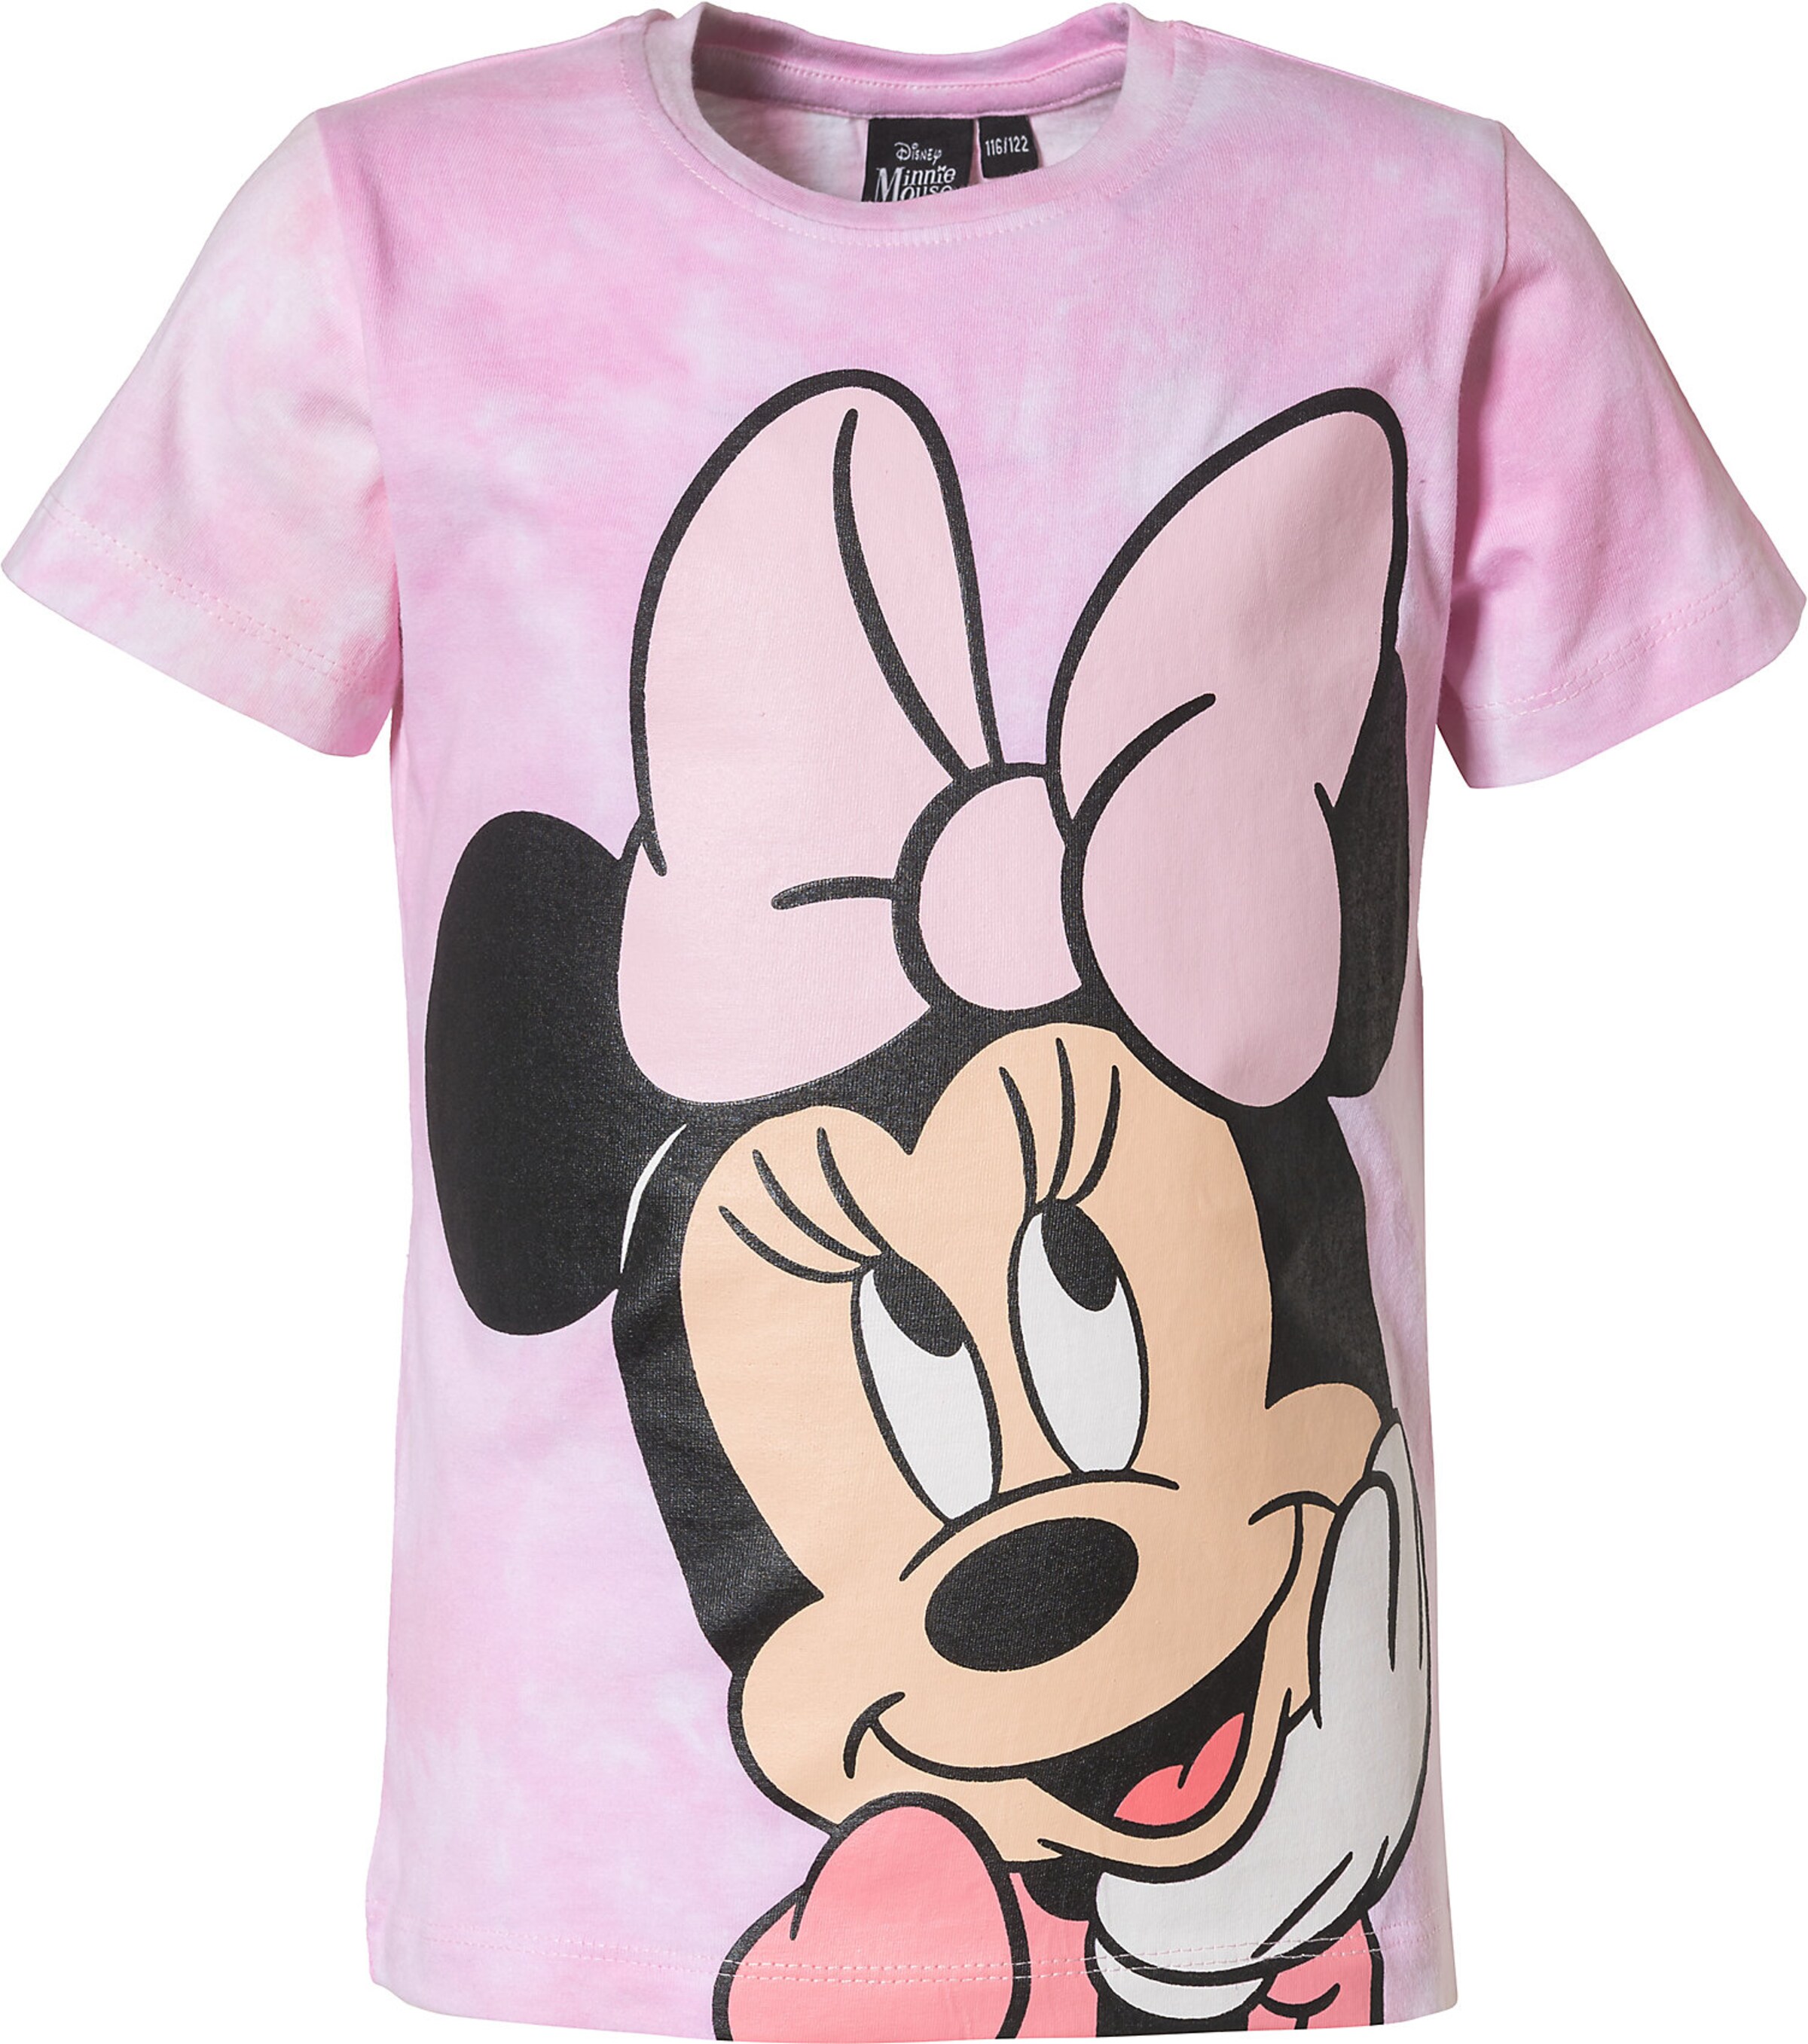 Kinder Teens (Gr. 140-176) Disney Minnie Mouse Shirt in Lila - FL14145